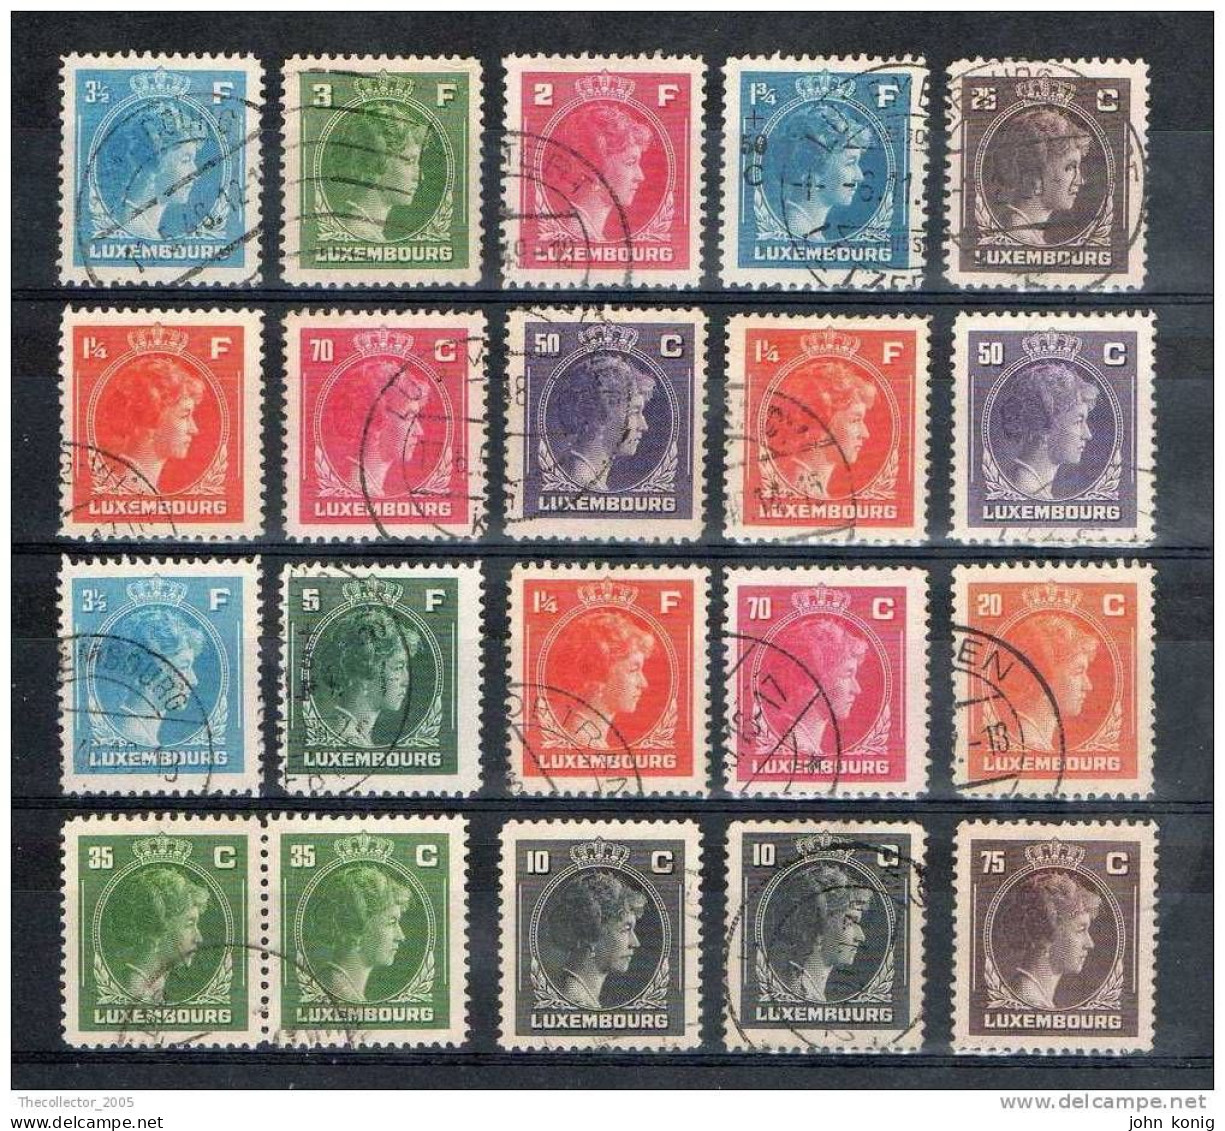 Luxembourg - Lussemburgo - Stamps Lot - Timbres Beaucoup - Menge Briefmarken - Sellos Mucho - Sammlungen